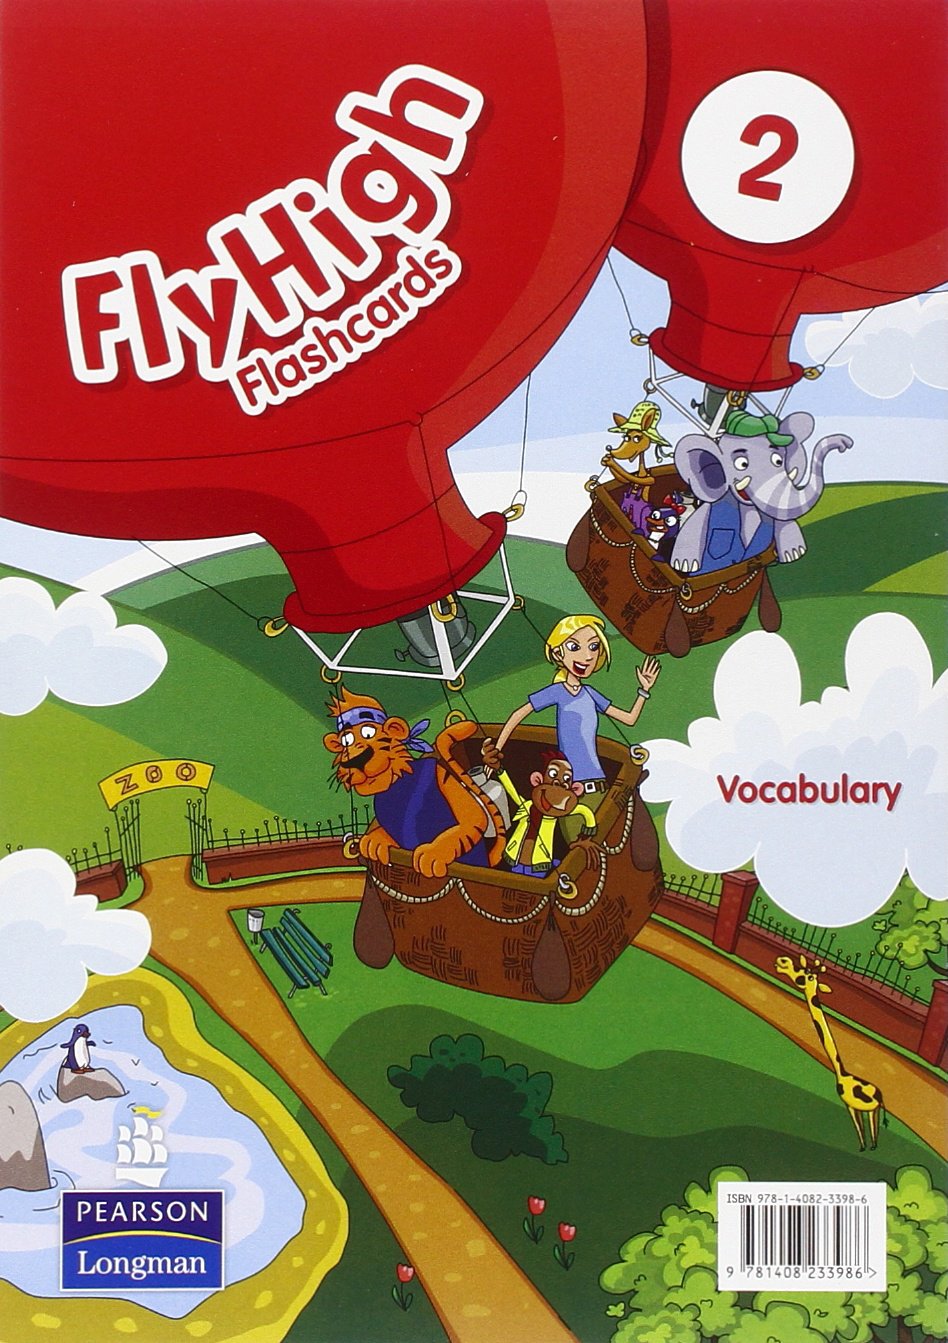 FLY HIGH 2 Vocabulary Flashcards